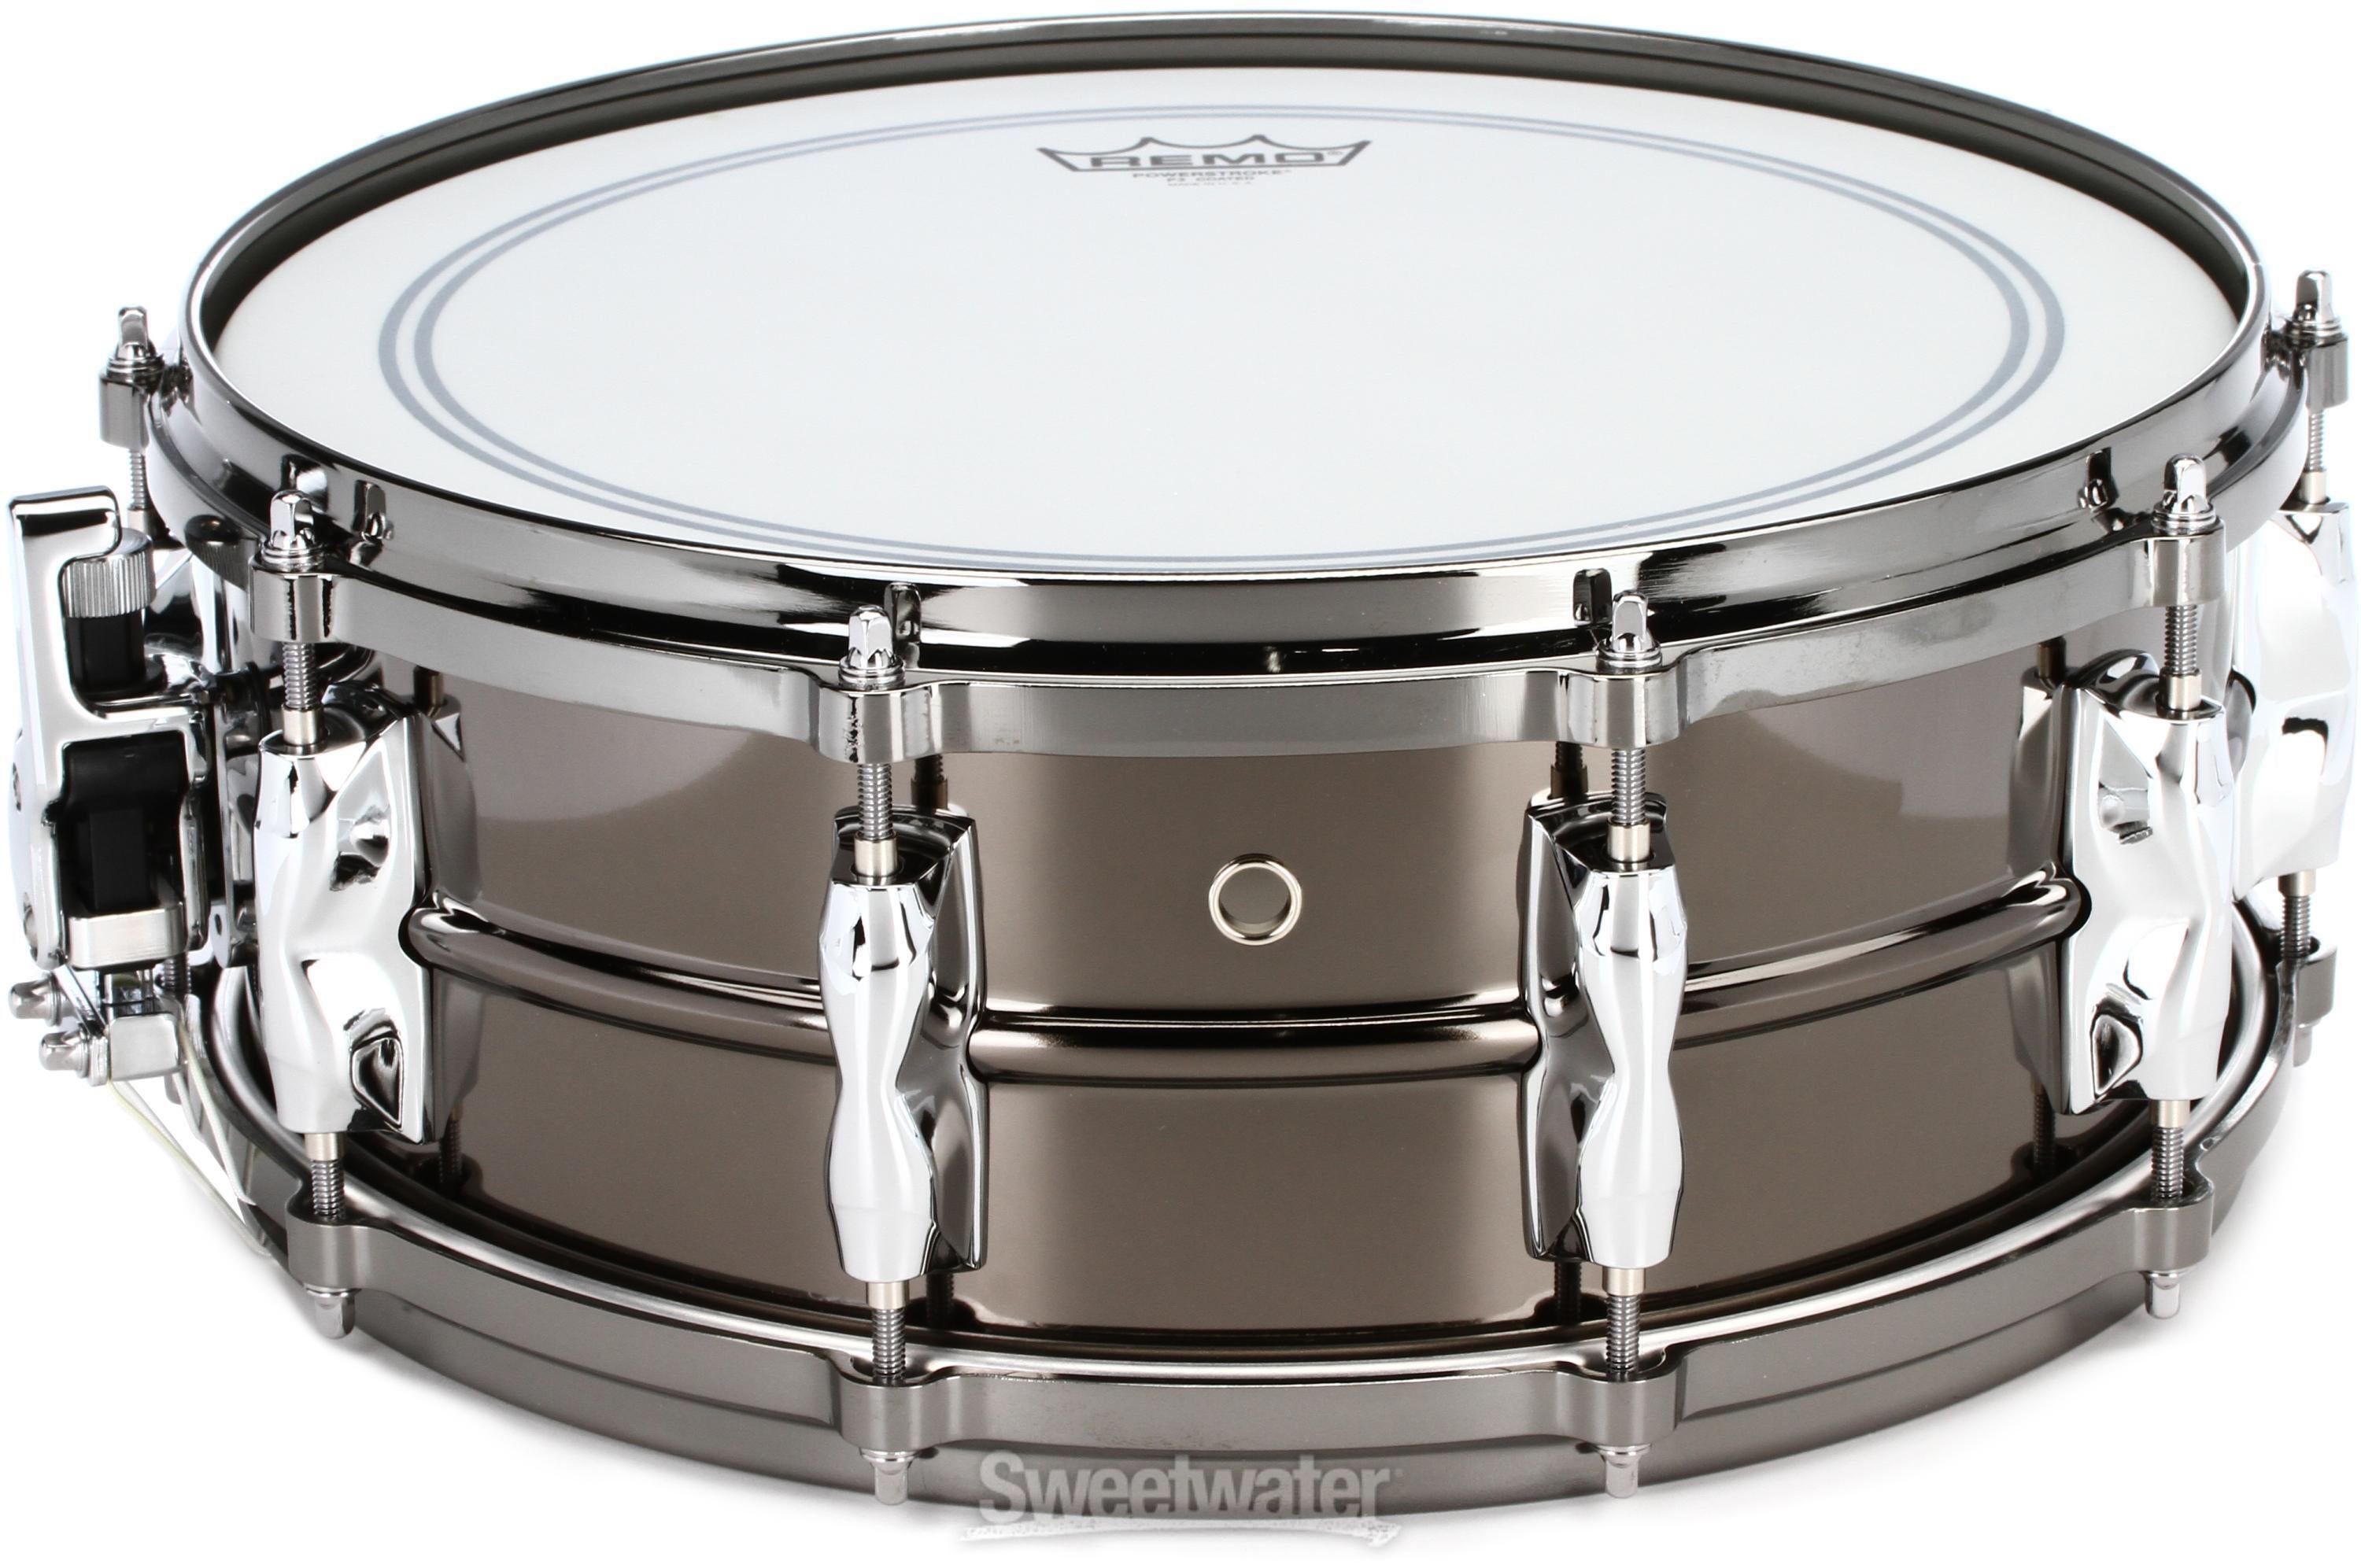 Yamaha Steve Gadd Signature Snare Drum - 5.5 x 14 inch - Black Nickel